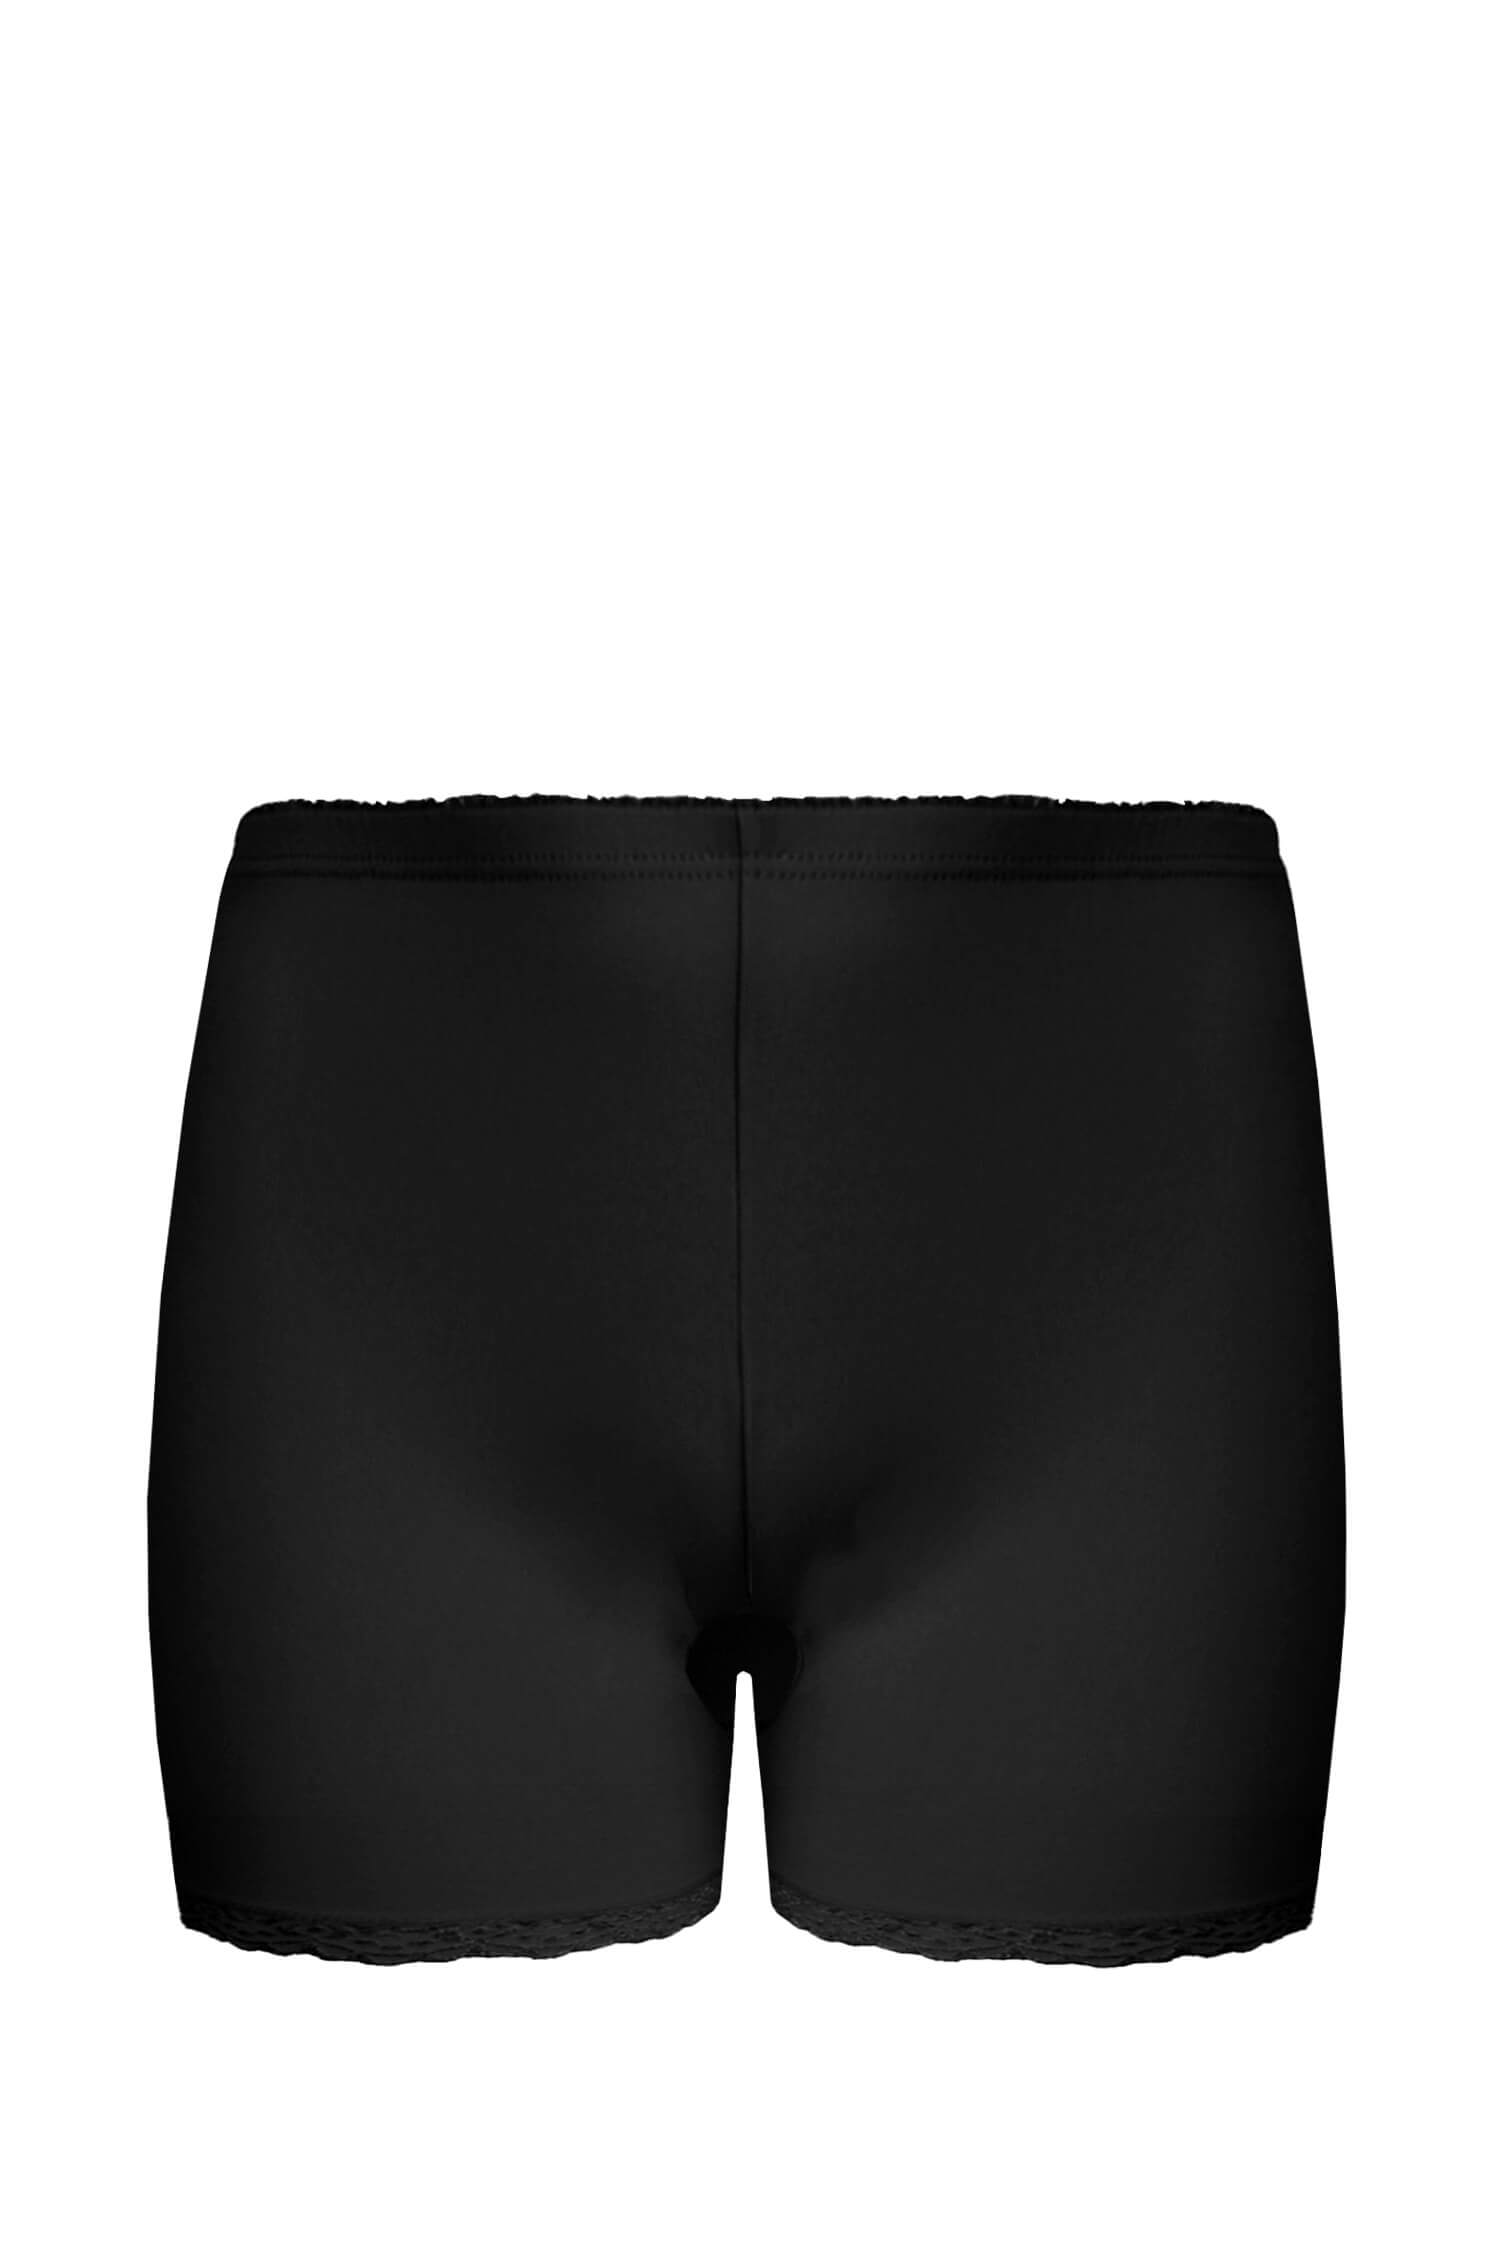 Helen kalhotky s nohavičkou krajka 703 XXL černá